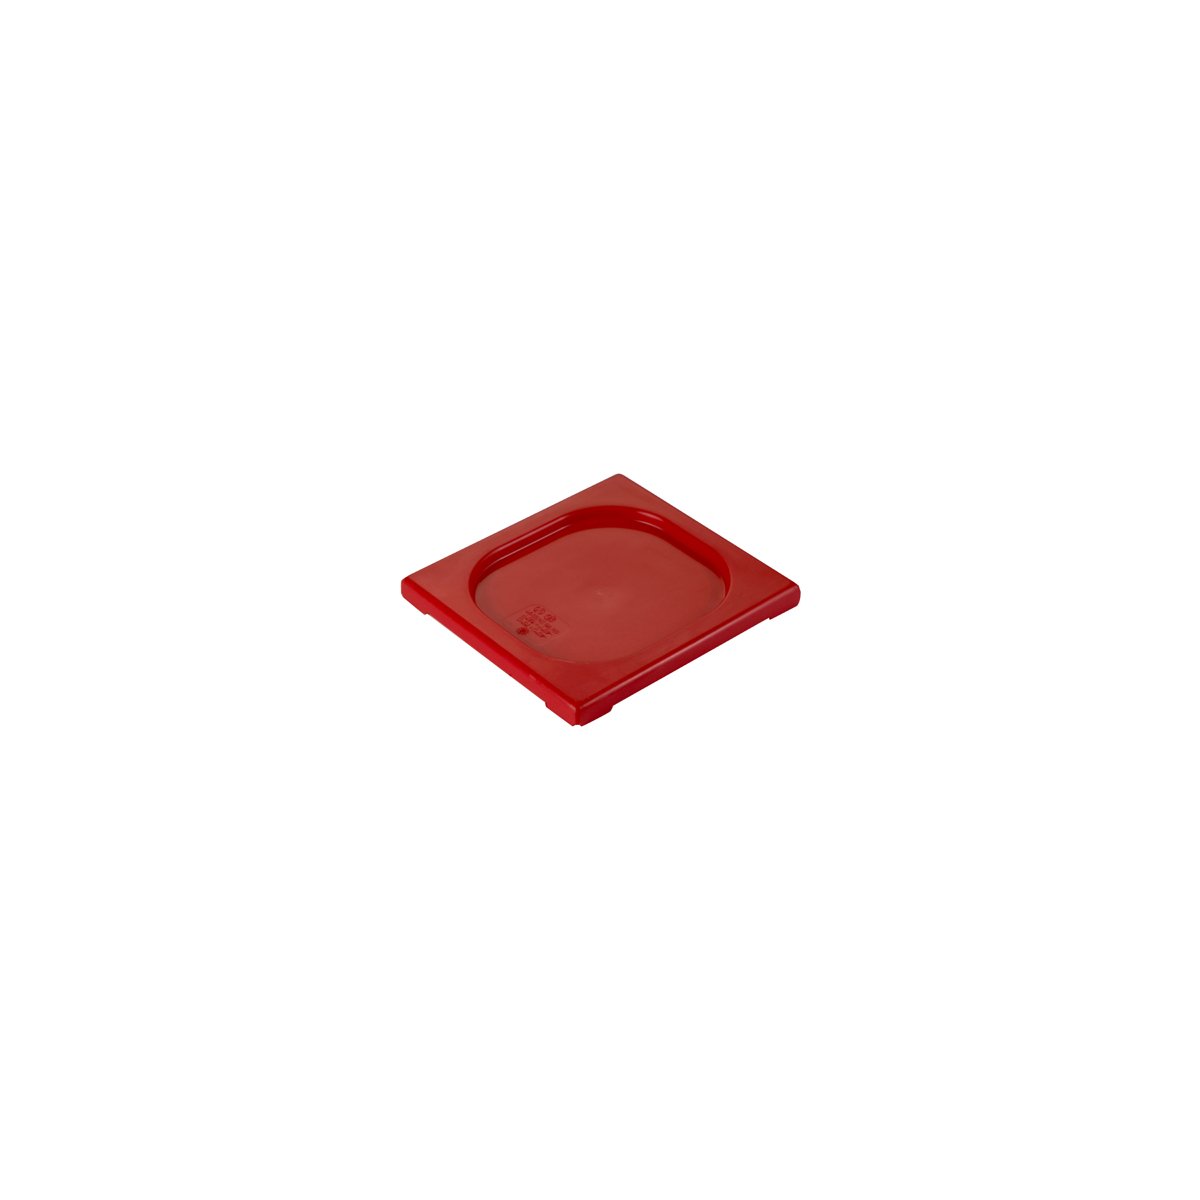 PPL-16R Inox Macel Gastronorm Lid Polypropylene 1/6 Size Red Tomkin Australia Hospitality Supplies